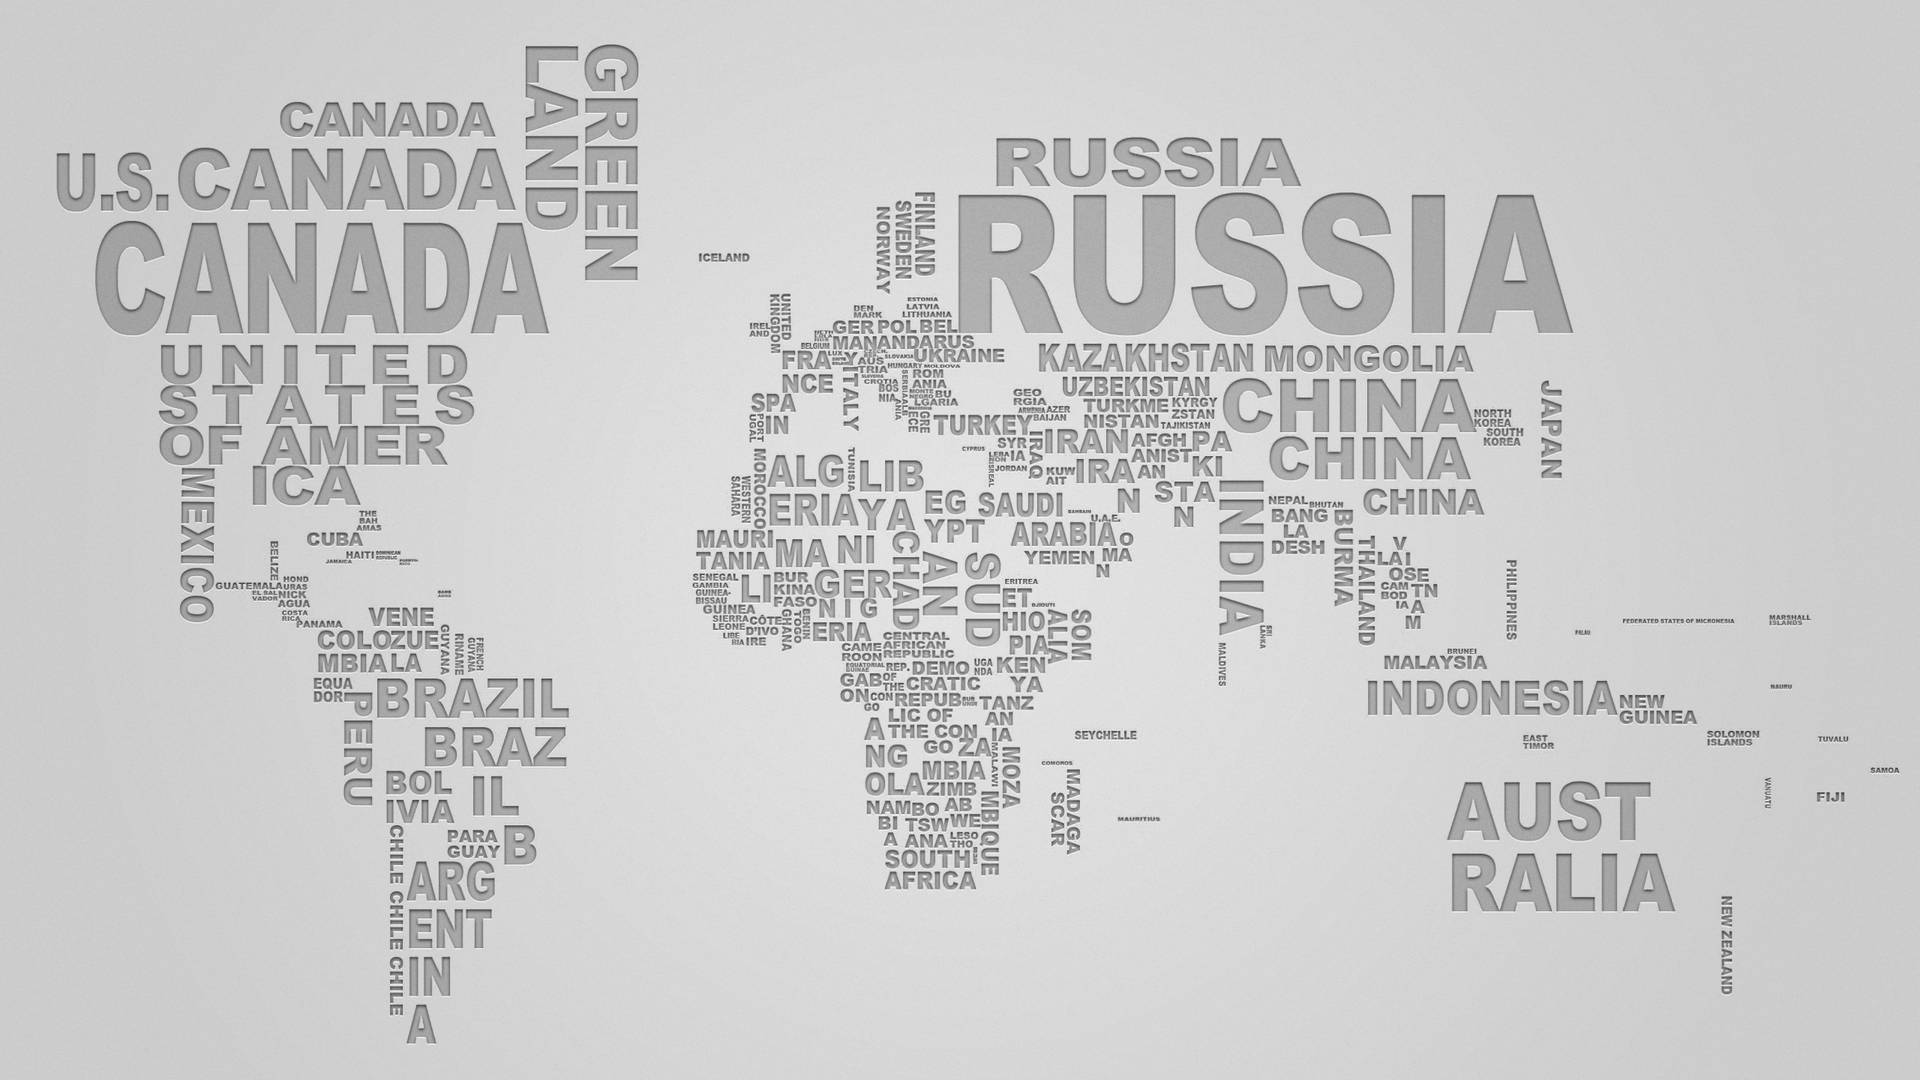 World Map Typography